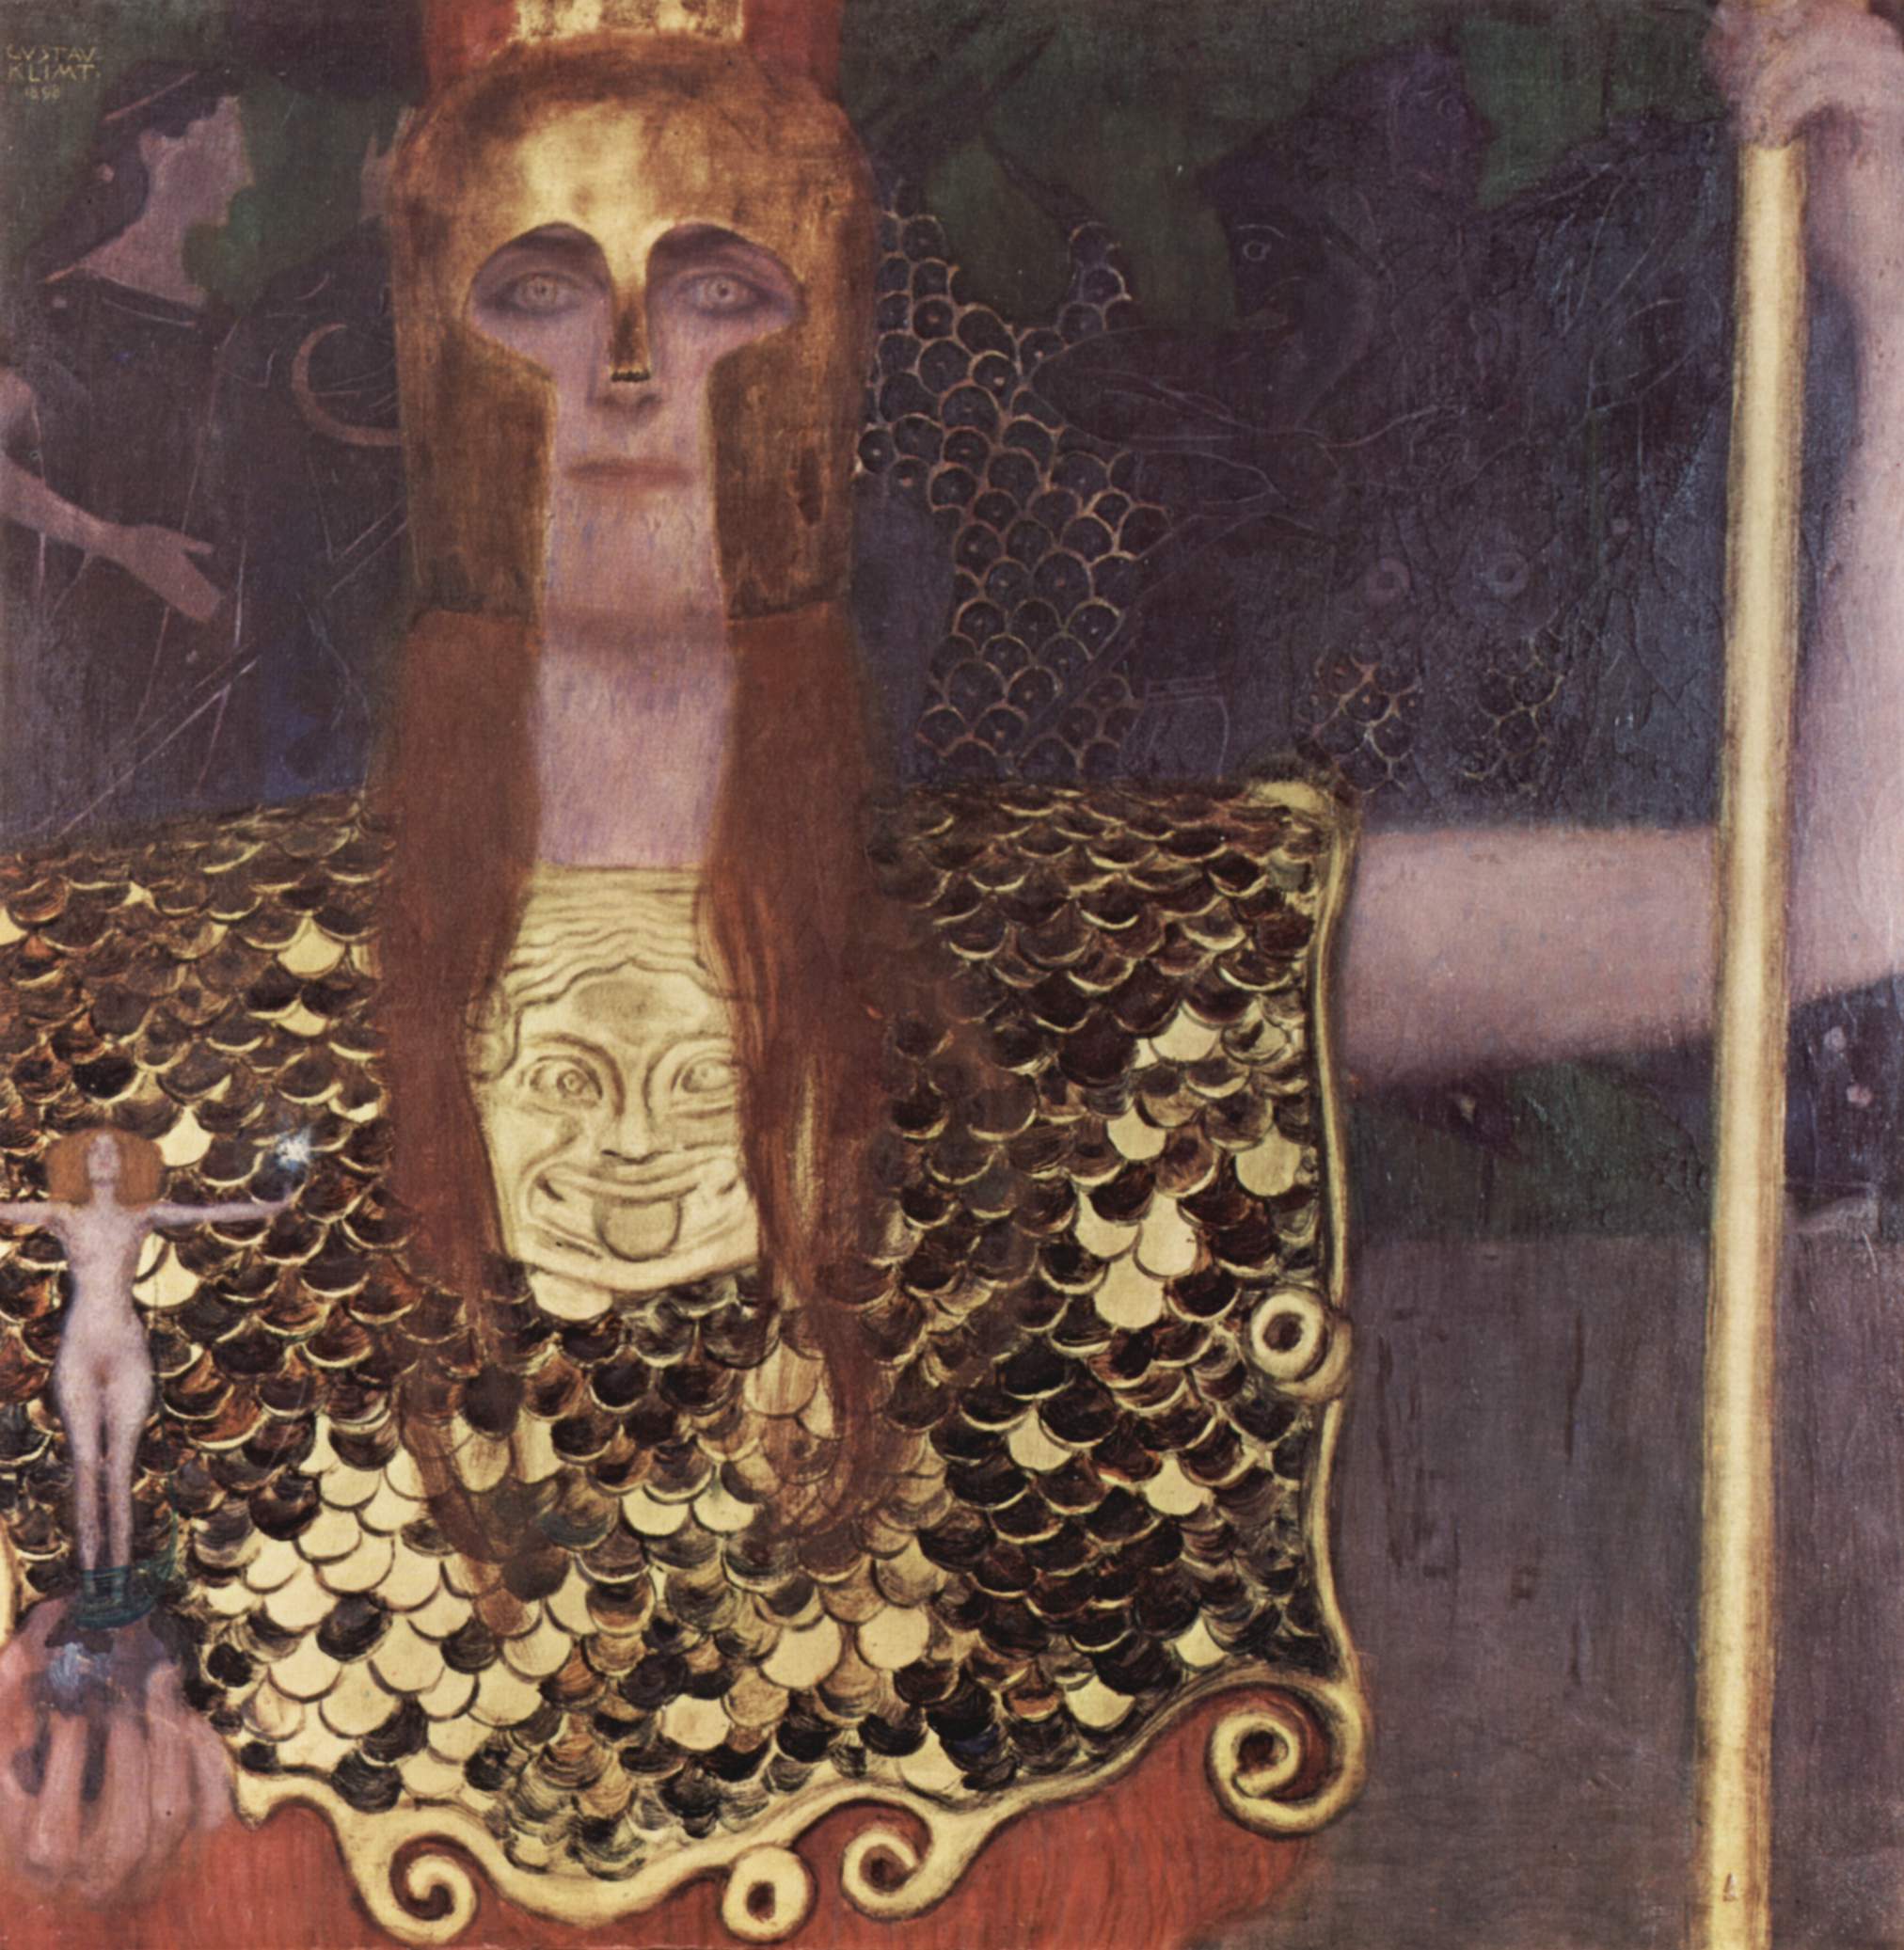 A painting of goddess Athena